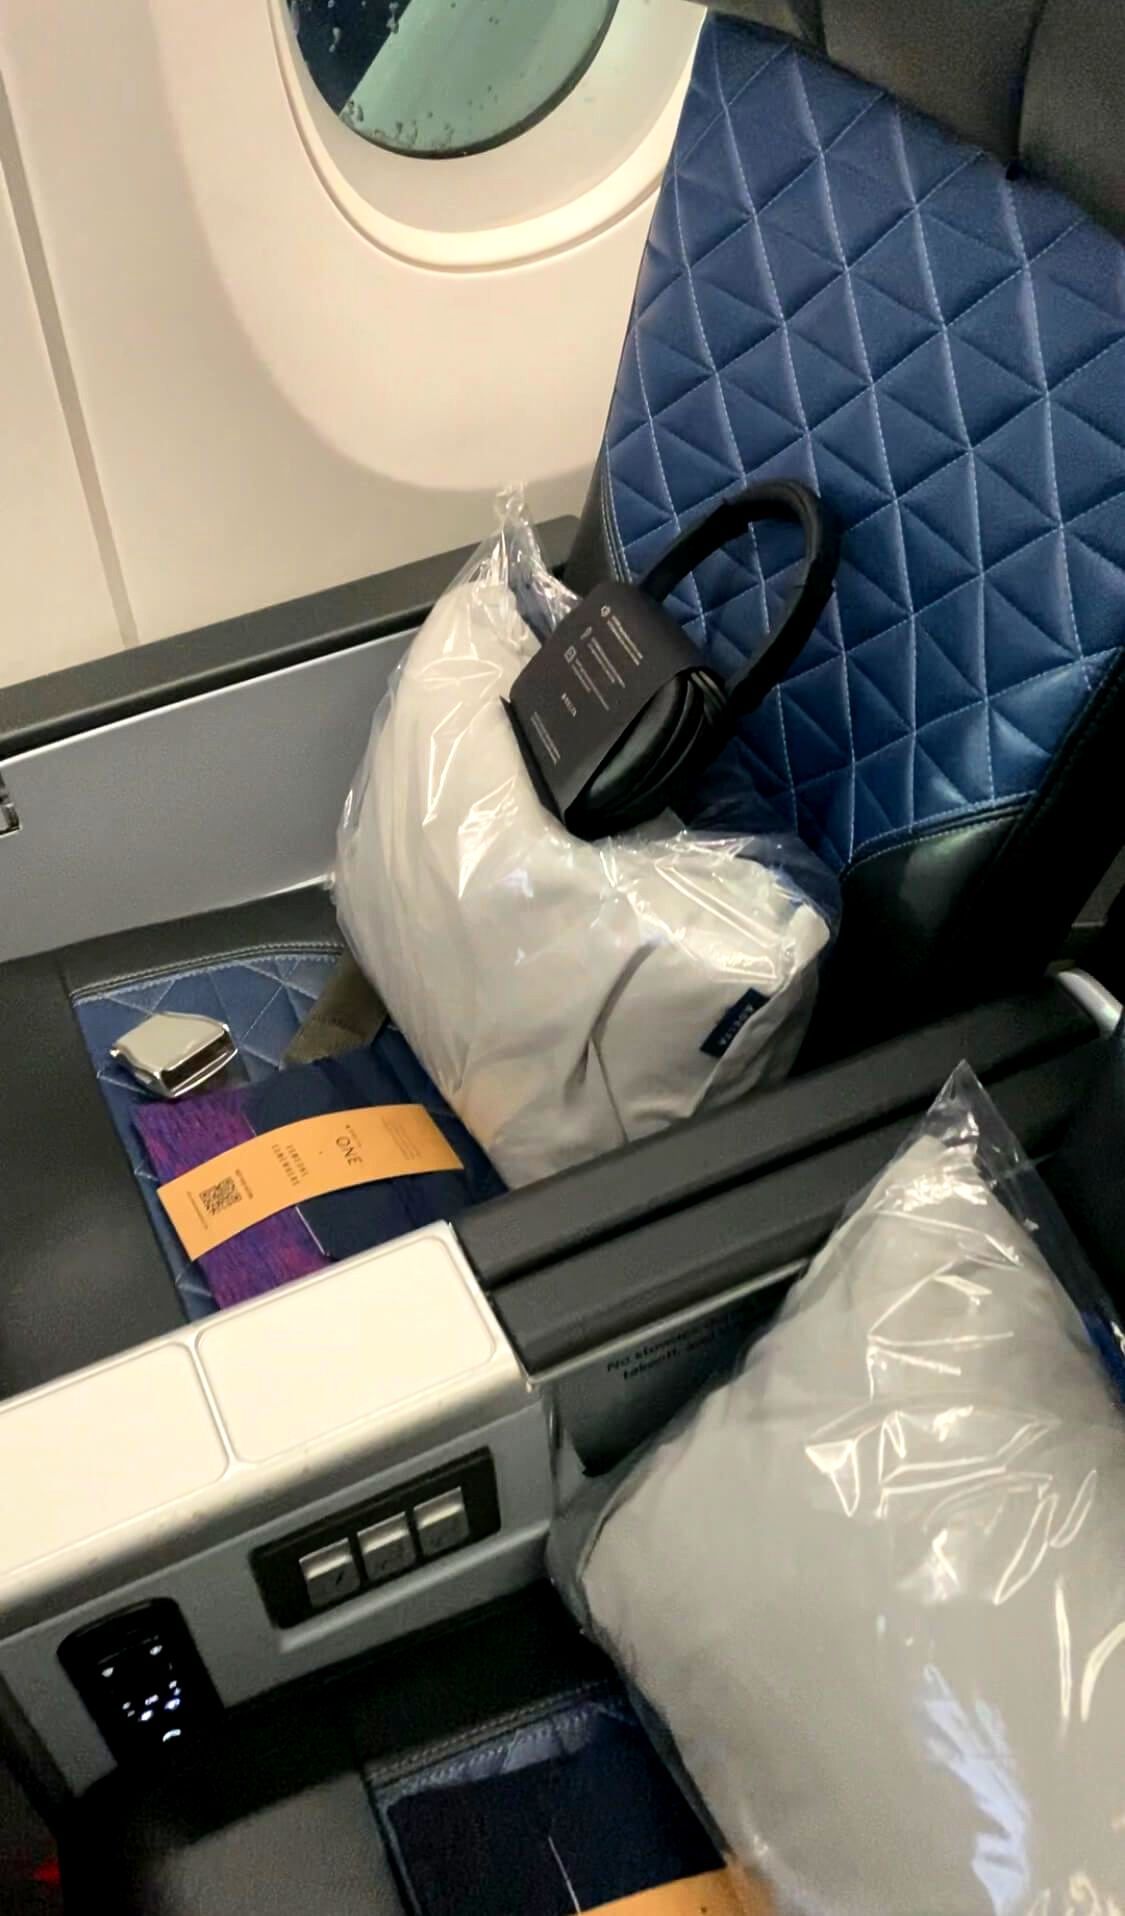 delta premium select cabin seat blue seatback gray pillow black headphones light gray arm rest silver buttons two plane seats